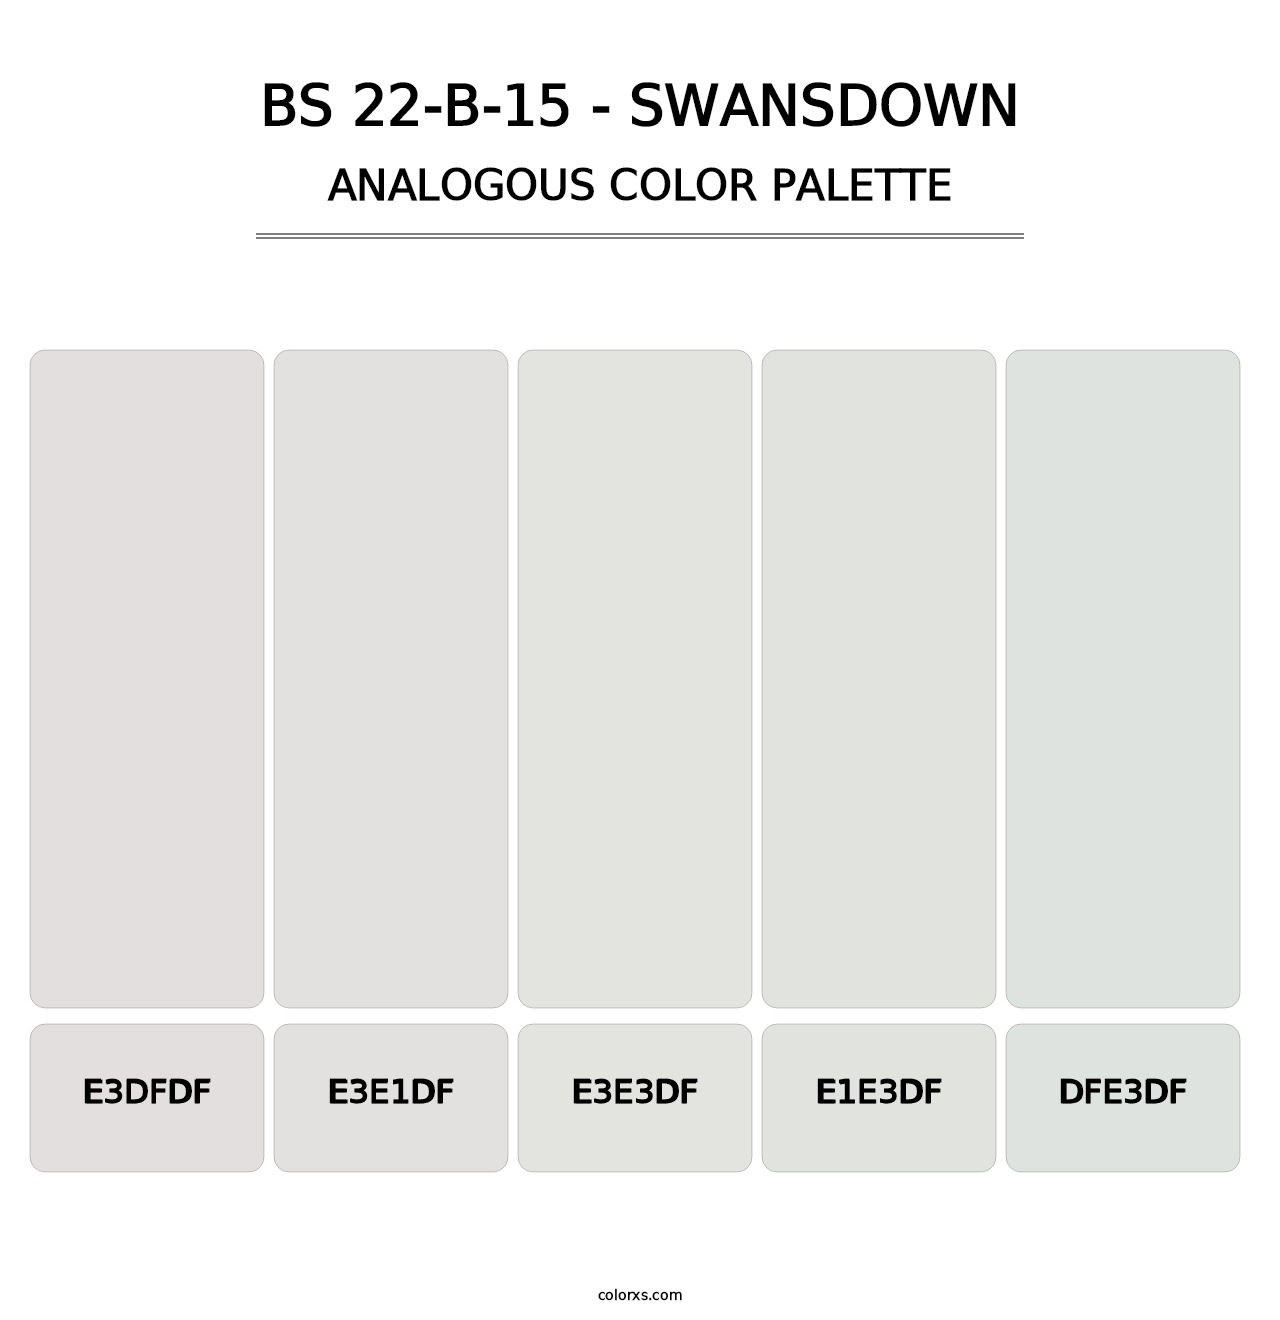 BS 22-B-15 - Swansdown - Analogous Color Palette